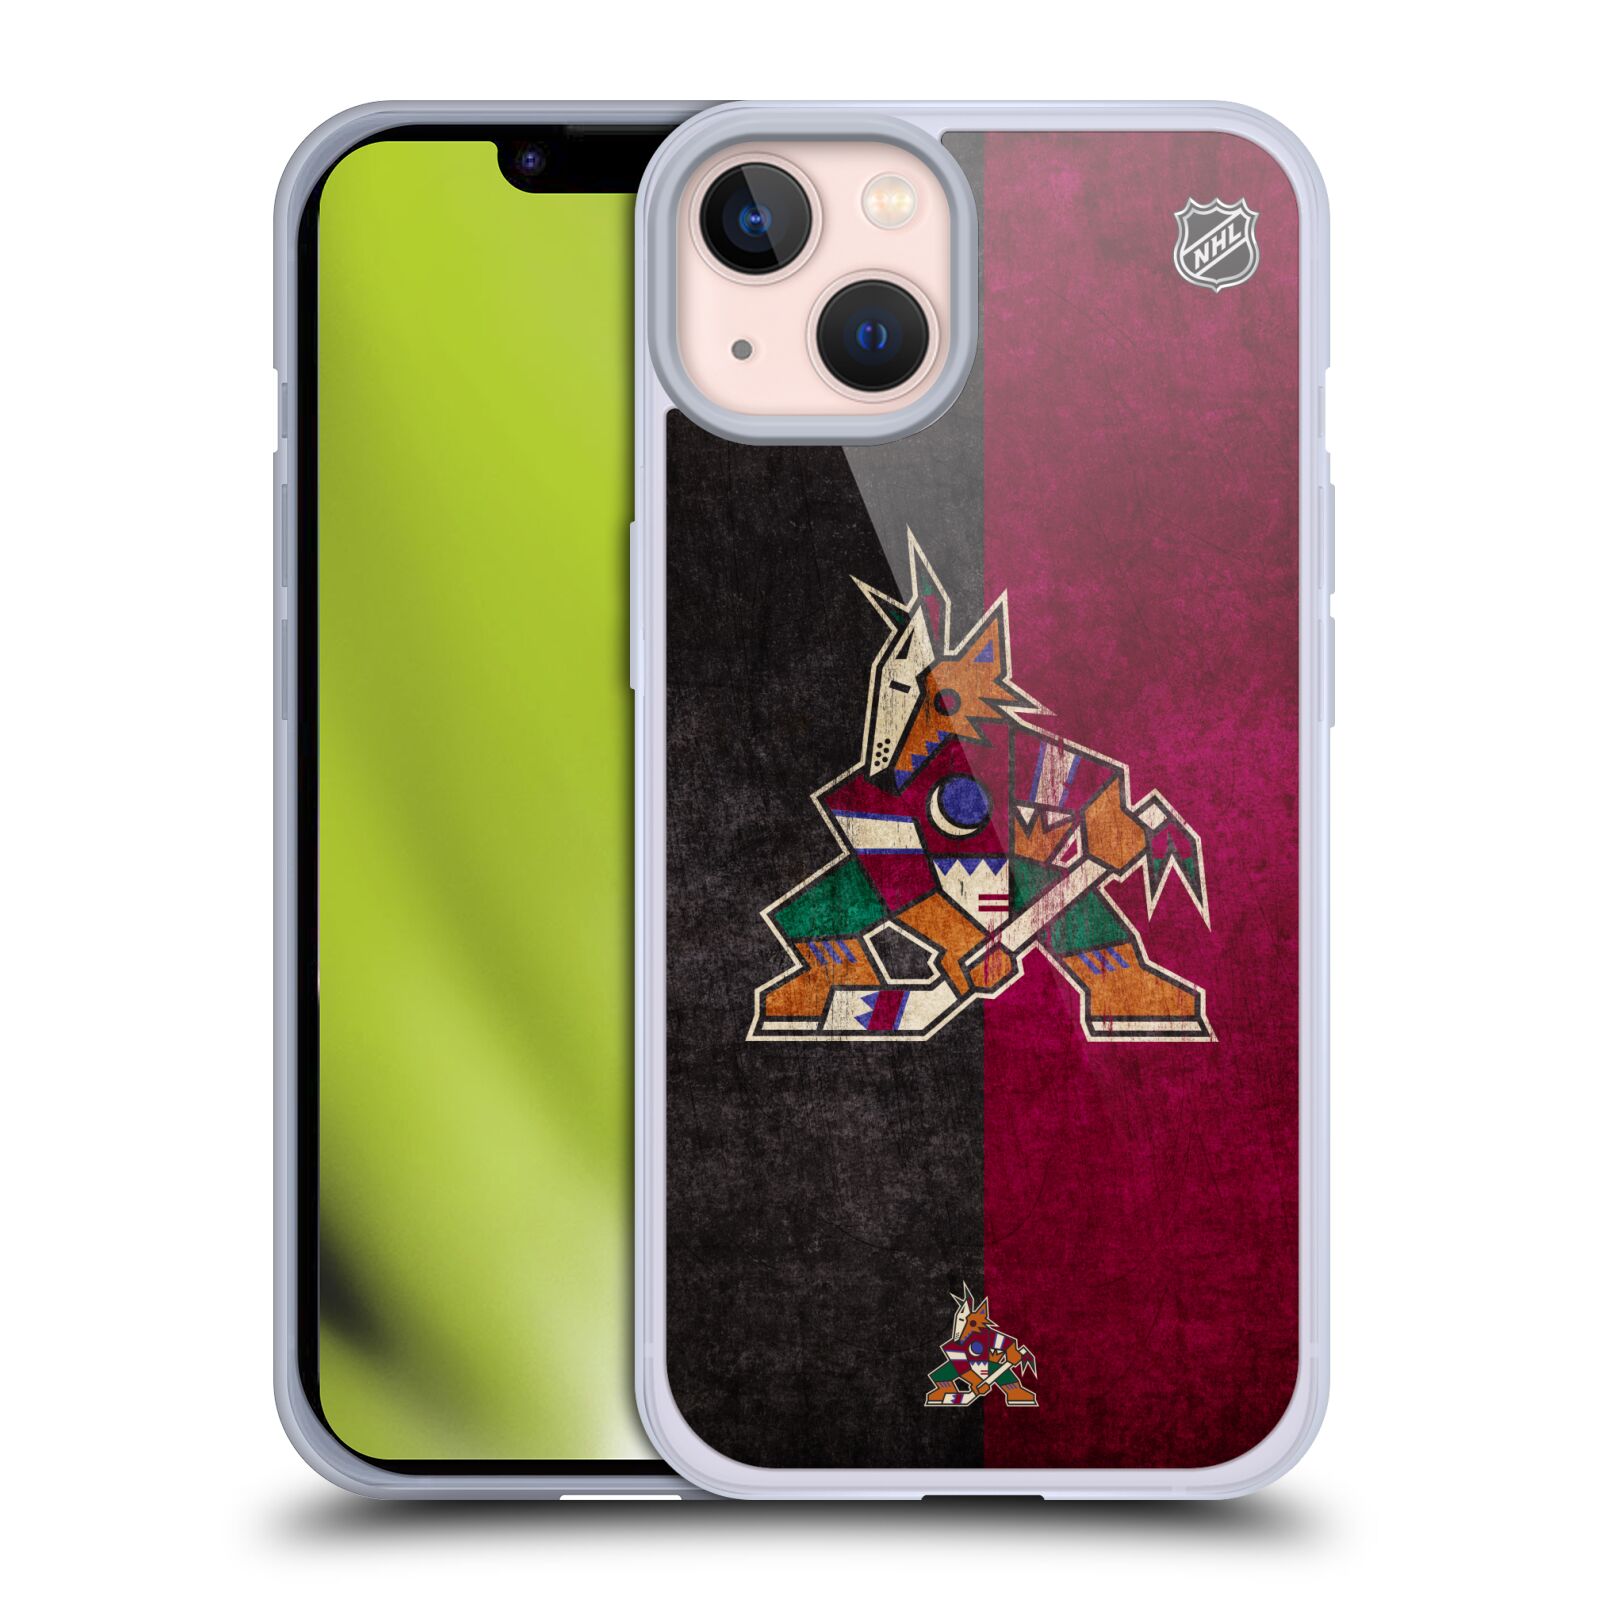 Silikonové pouzdro na mobil Apple iPhone 13 - NHL - Půlené logo Arizona Coyotes (Silikonový kryt, obal, pouzdro na mobilní telefon Apple iPhone 13 s licencovaným motivem NHL - Půlené logo Arizona Coyotes)